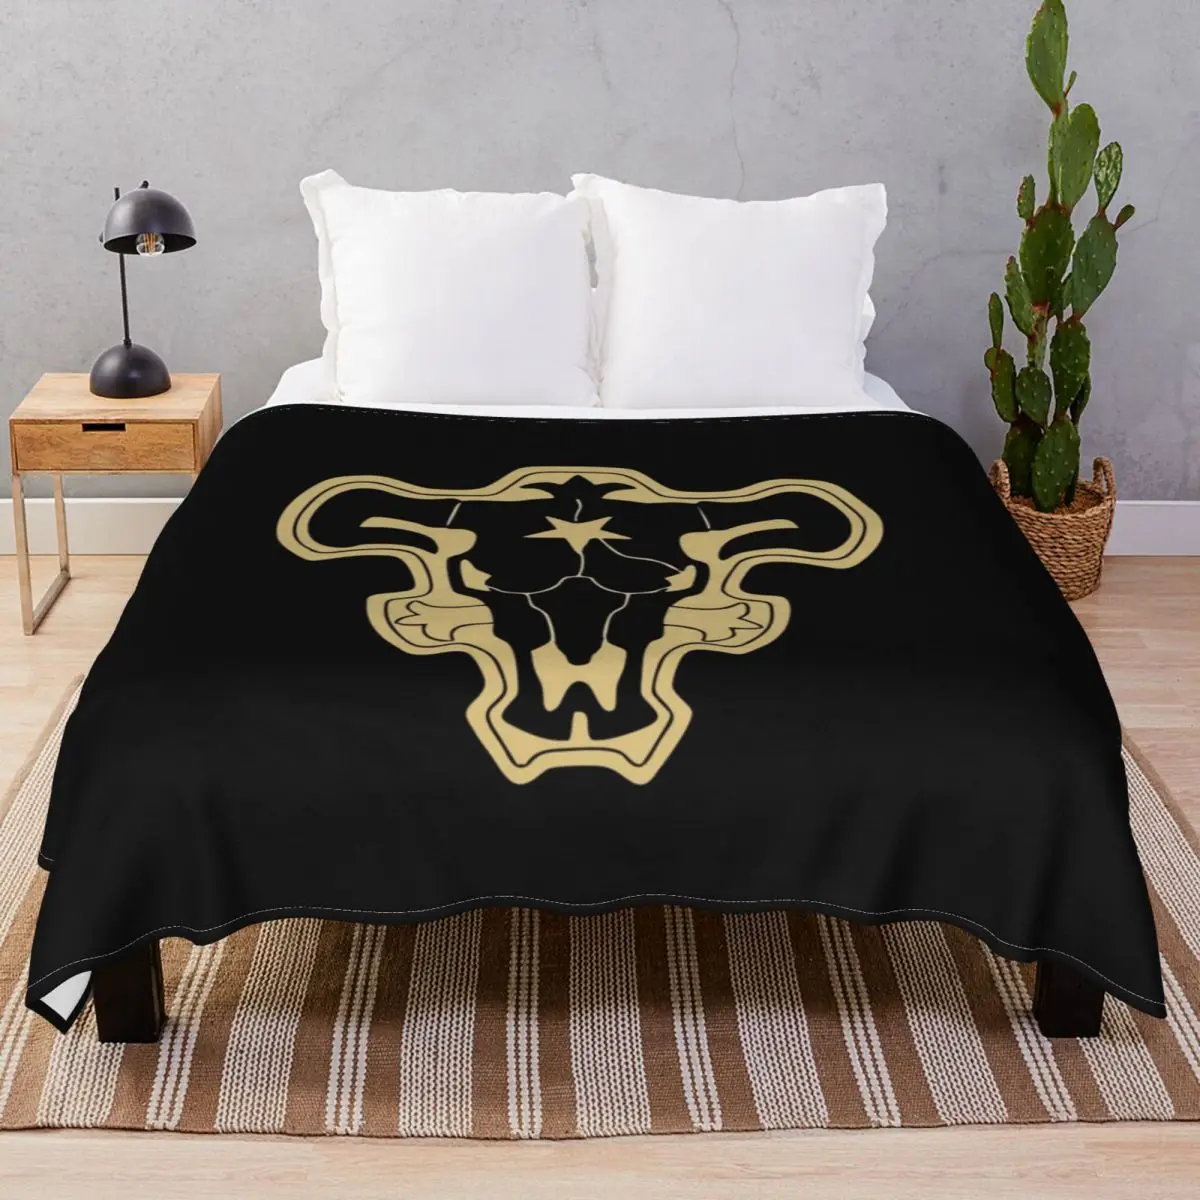 Black Clover Black Bulls Blanket Coral Fleece Decoration Ultra-Soft Throw Blankets for Bed Sofa Travel Cinema